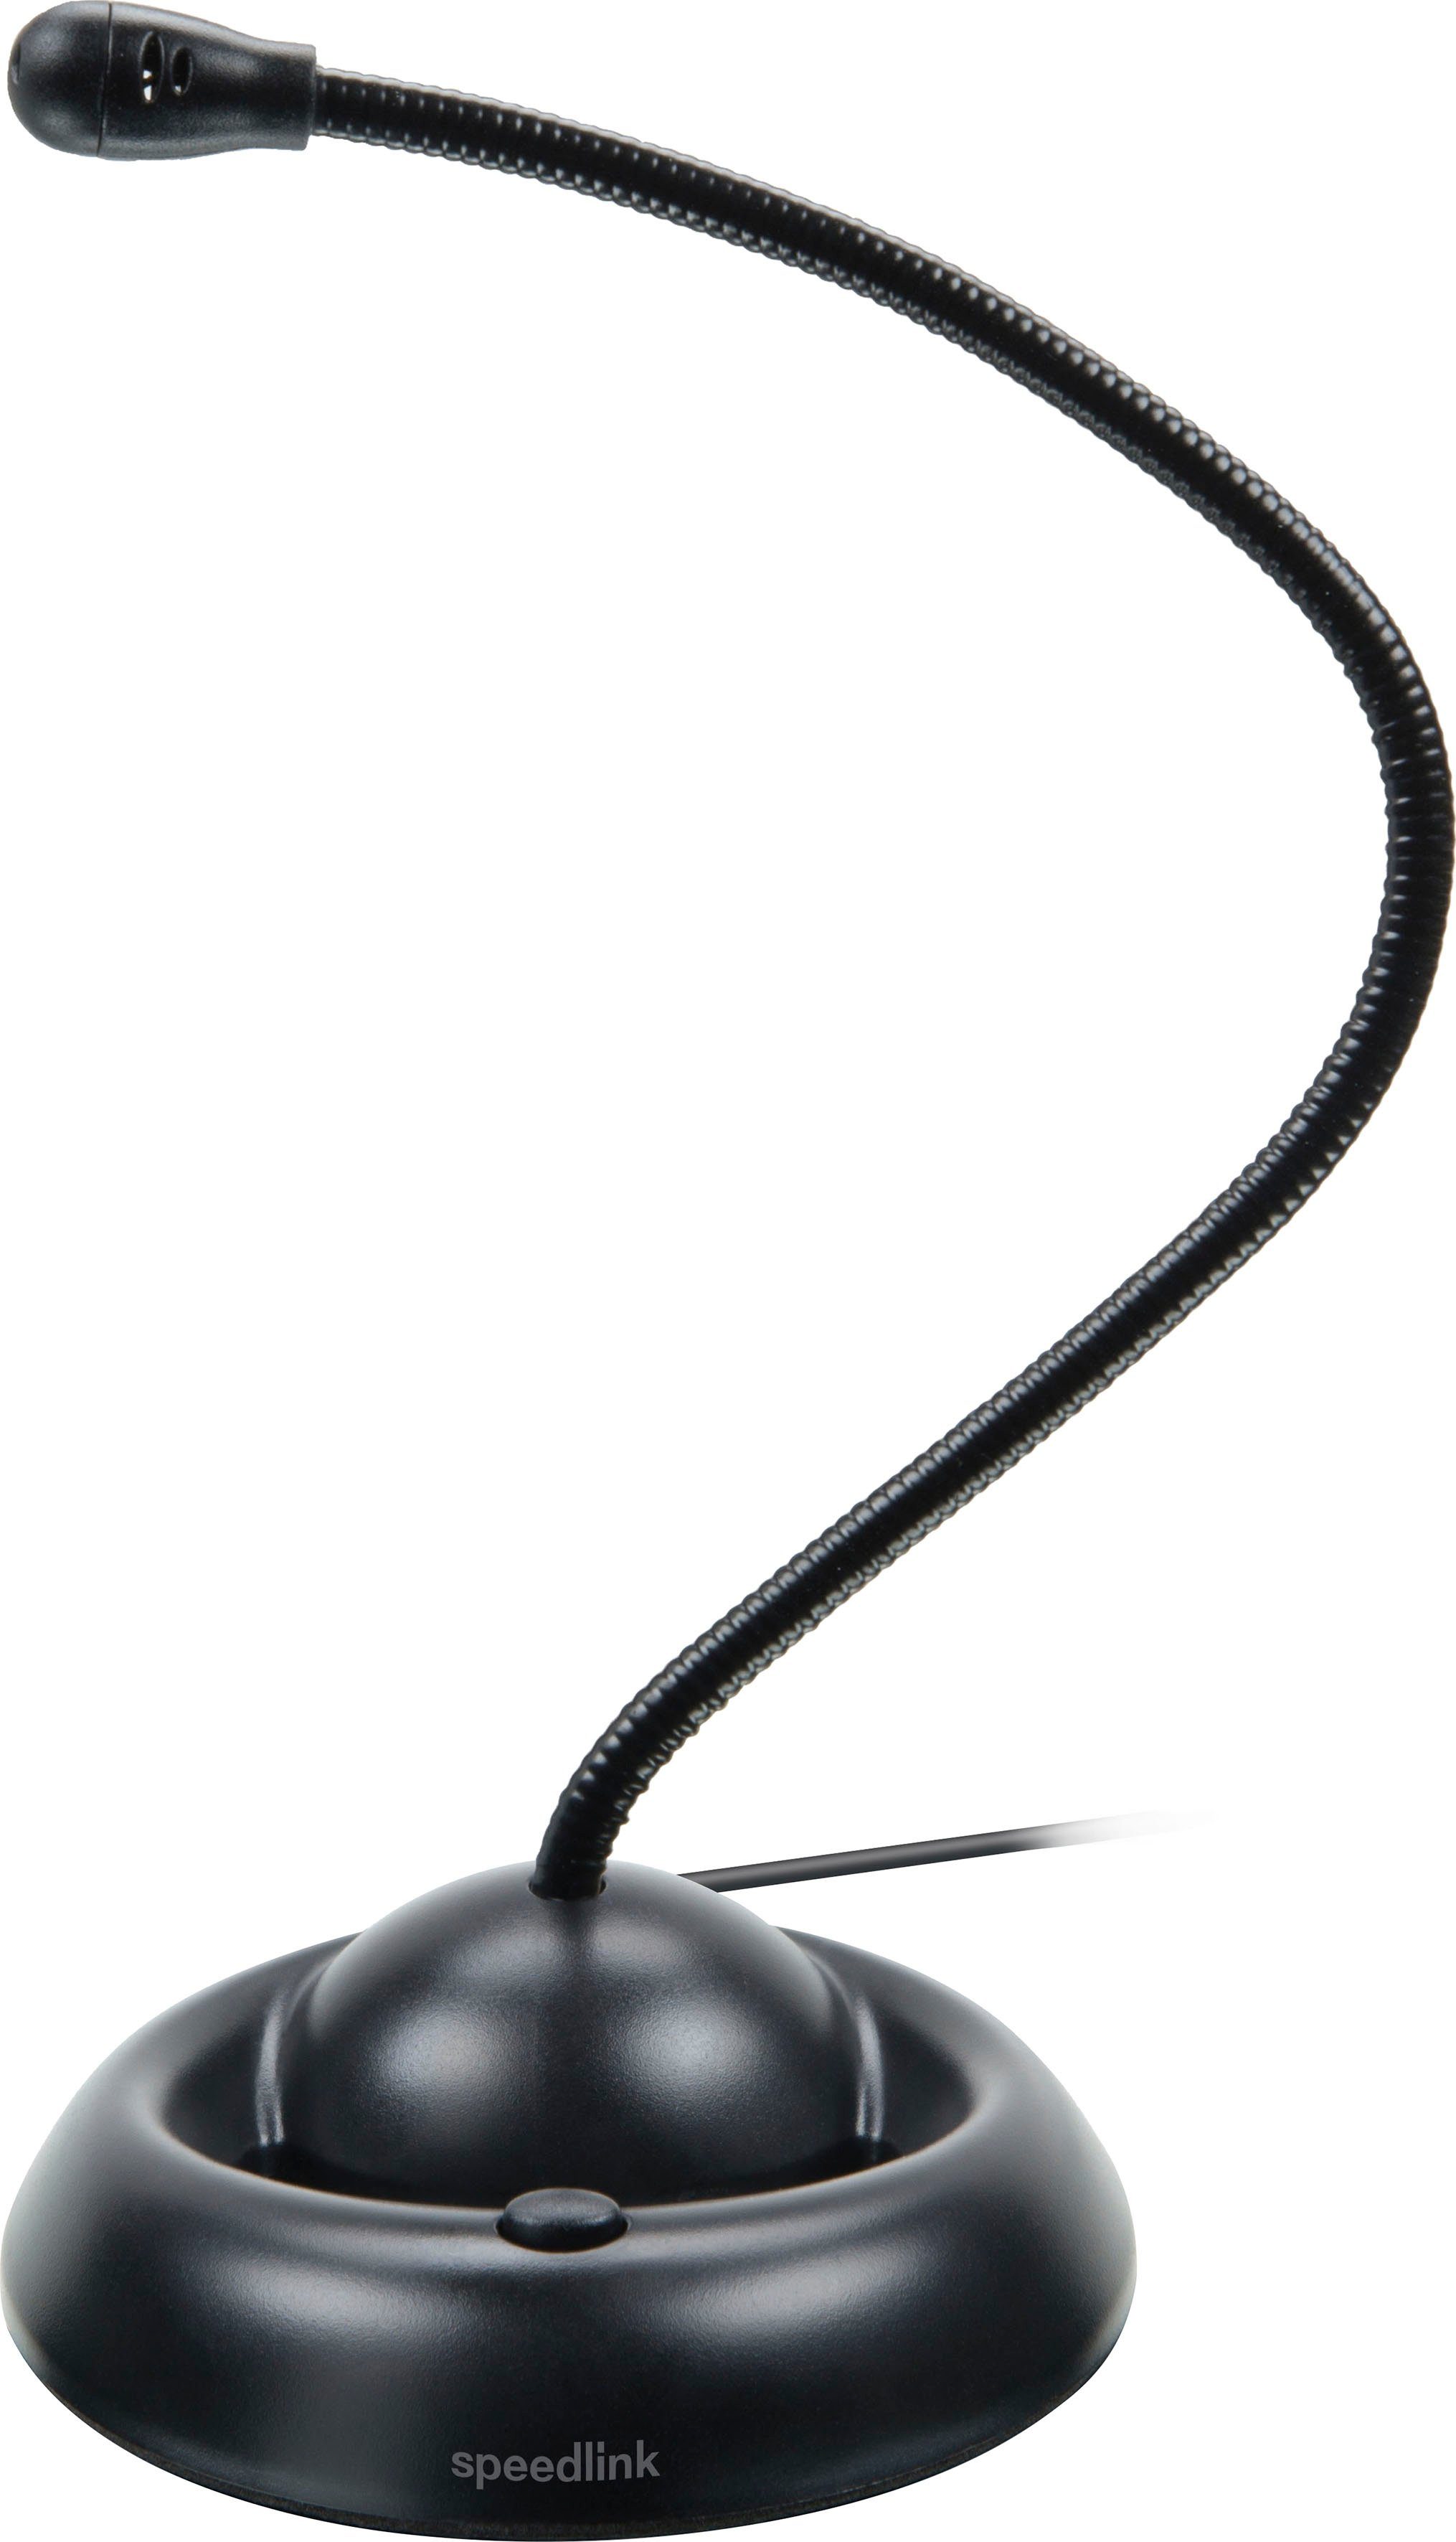 Speedlink Mikrofon LUCENT USB Tisch-Mikrofon Desktop Microphone, Mic mit  Standfuß Ständer, Stummschalter, 1,8m langes Kabel, flexibel verformbarer  Mikrofonhals, Tischmikrofon passend für PC Notebook Laptop etc.